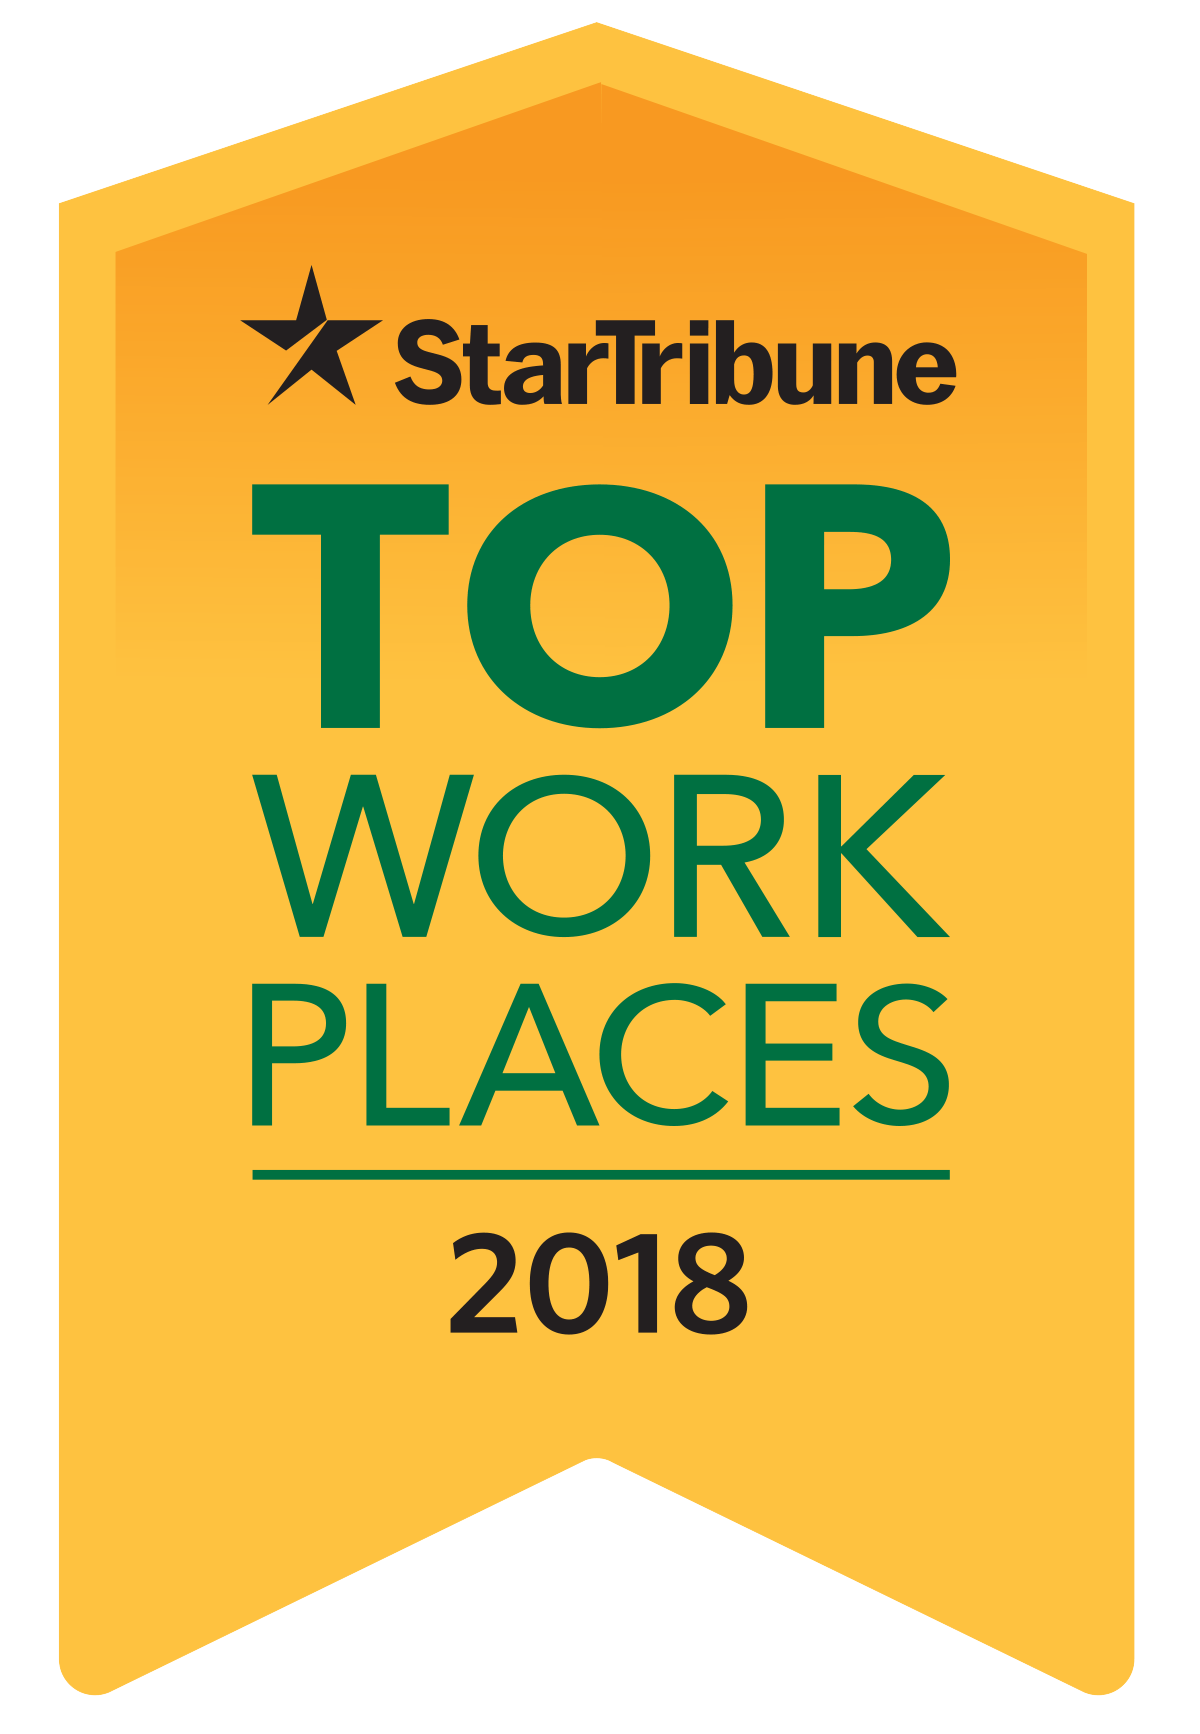 Star Tribune Logo - Top Workplaces PR Materials - StarTribune.com